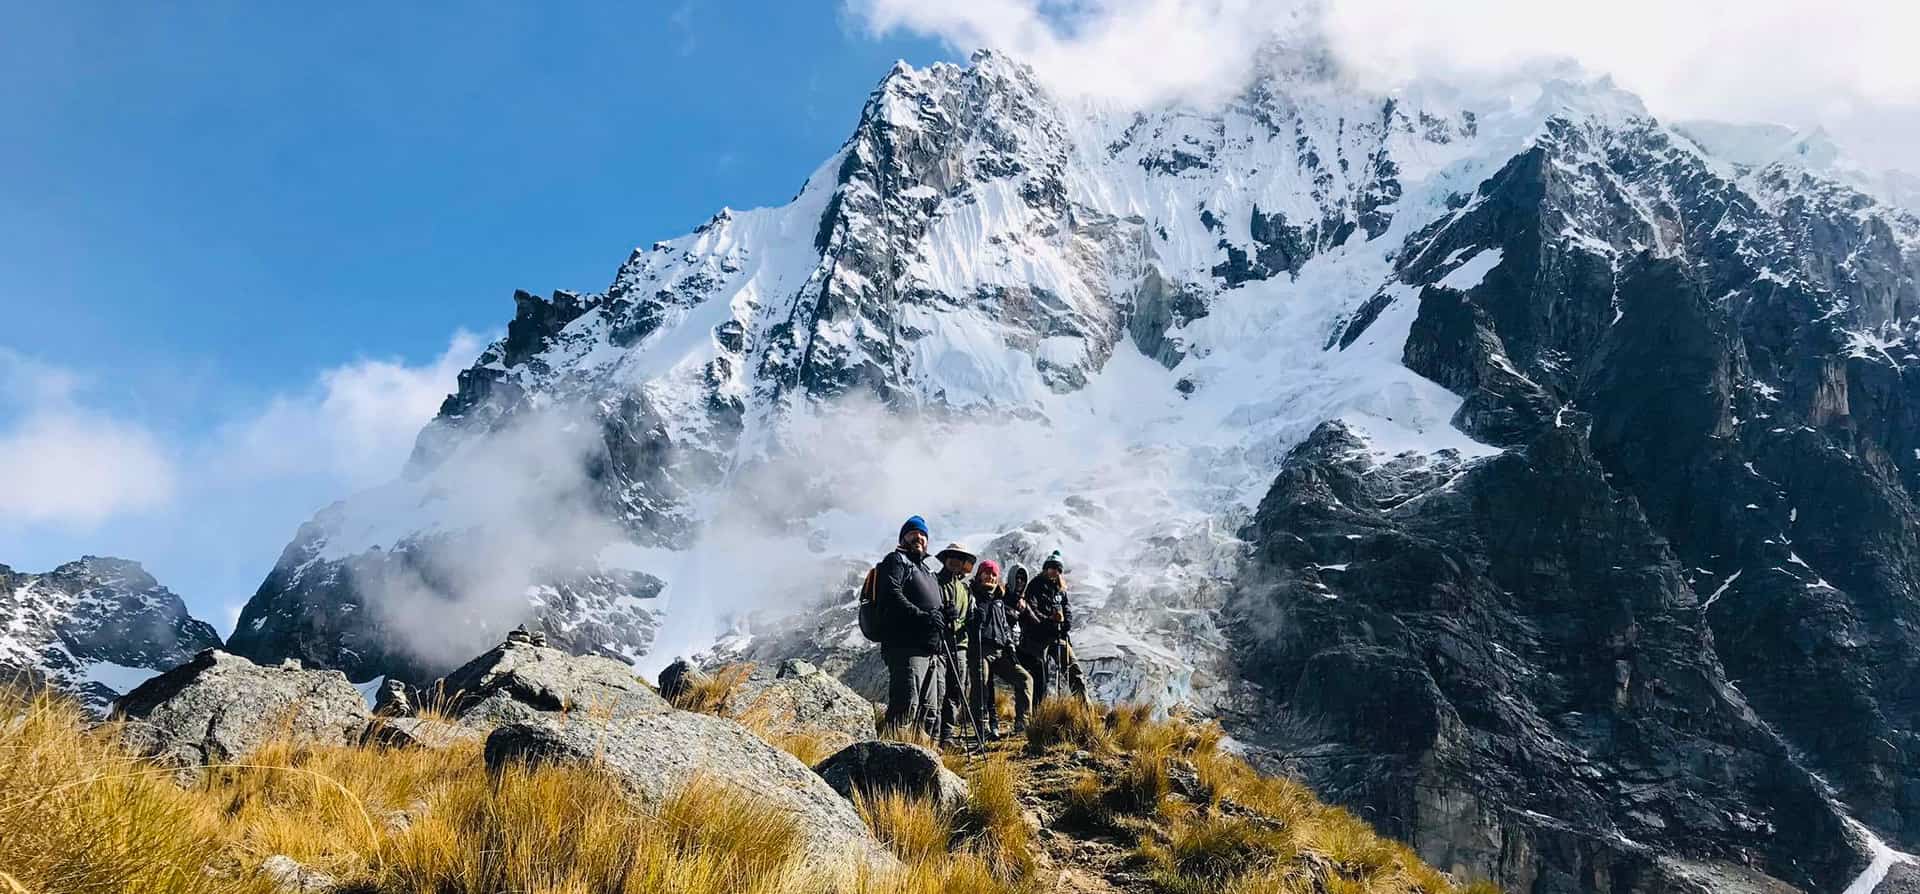 Complete Guide to hike the Salkantay Trek to Machu Picchu